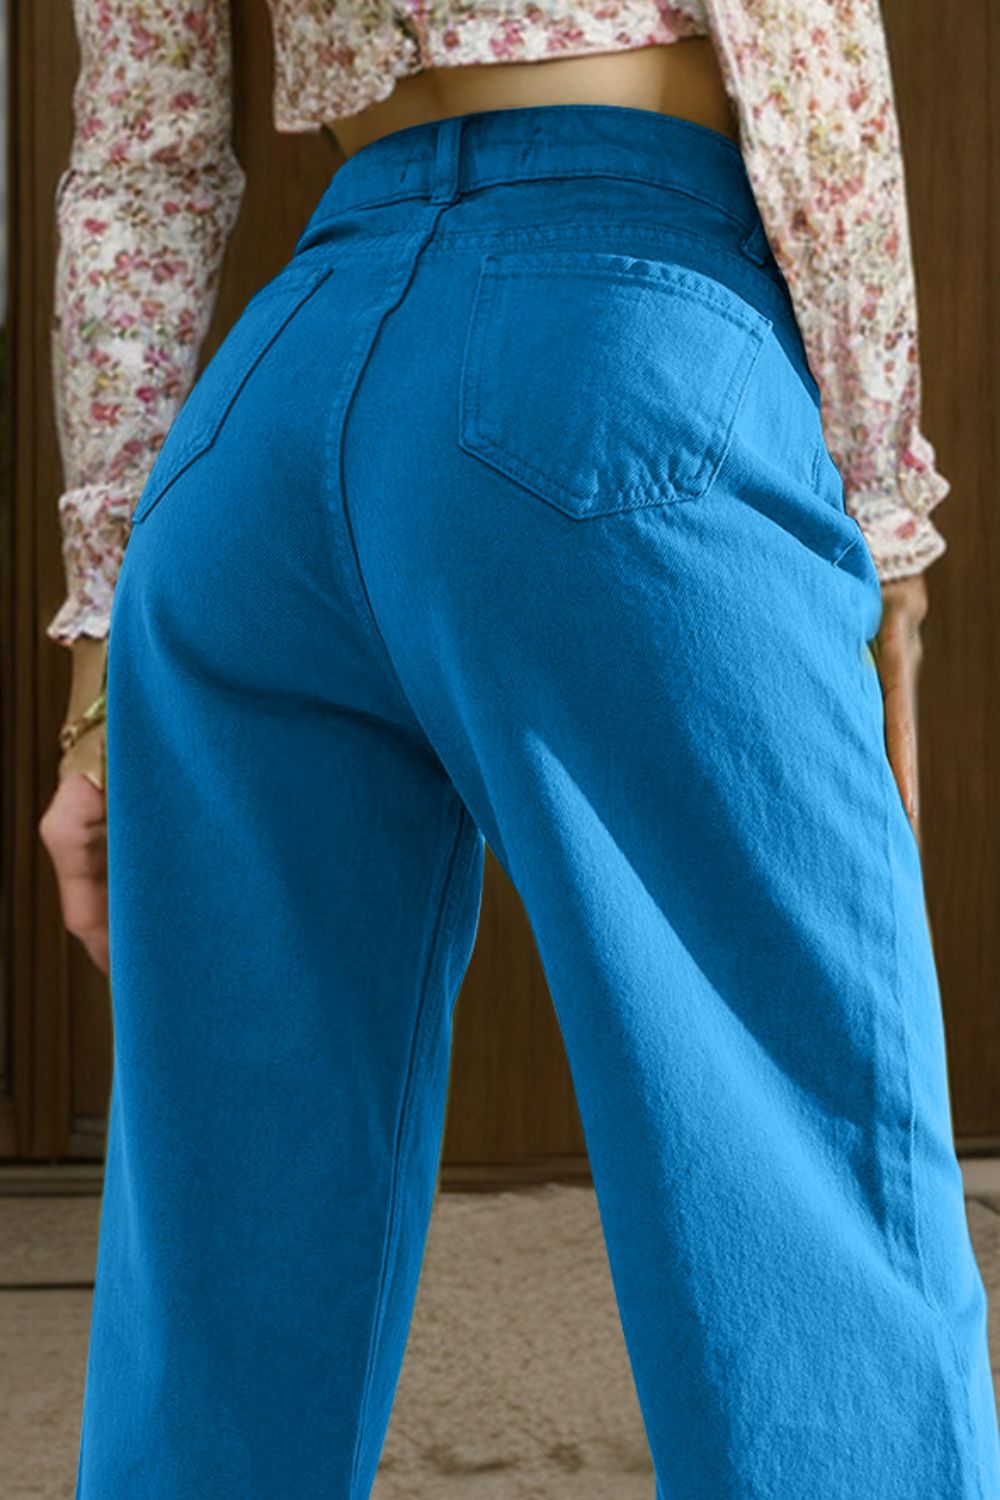 Wide Leg Jeans with Pockets Bottom wear